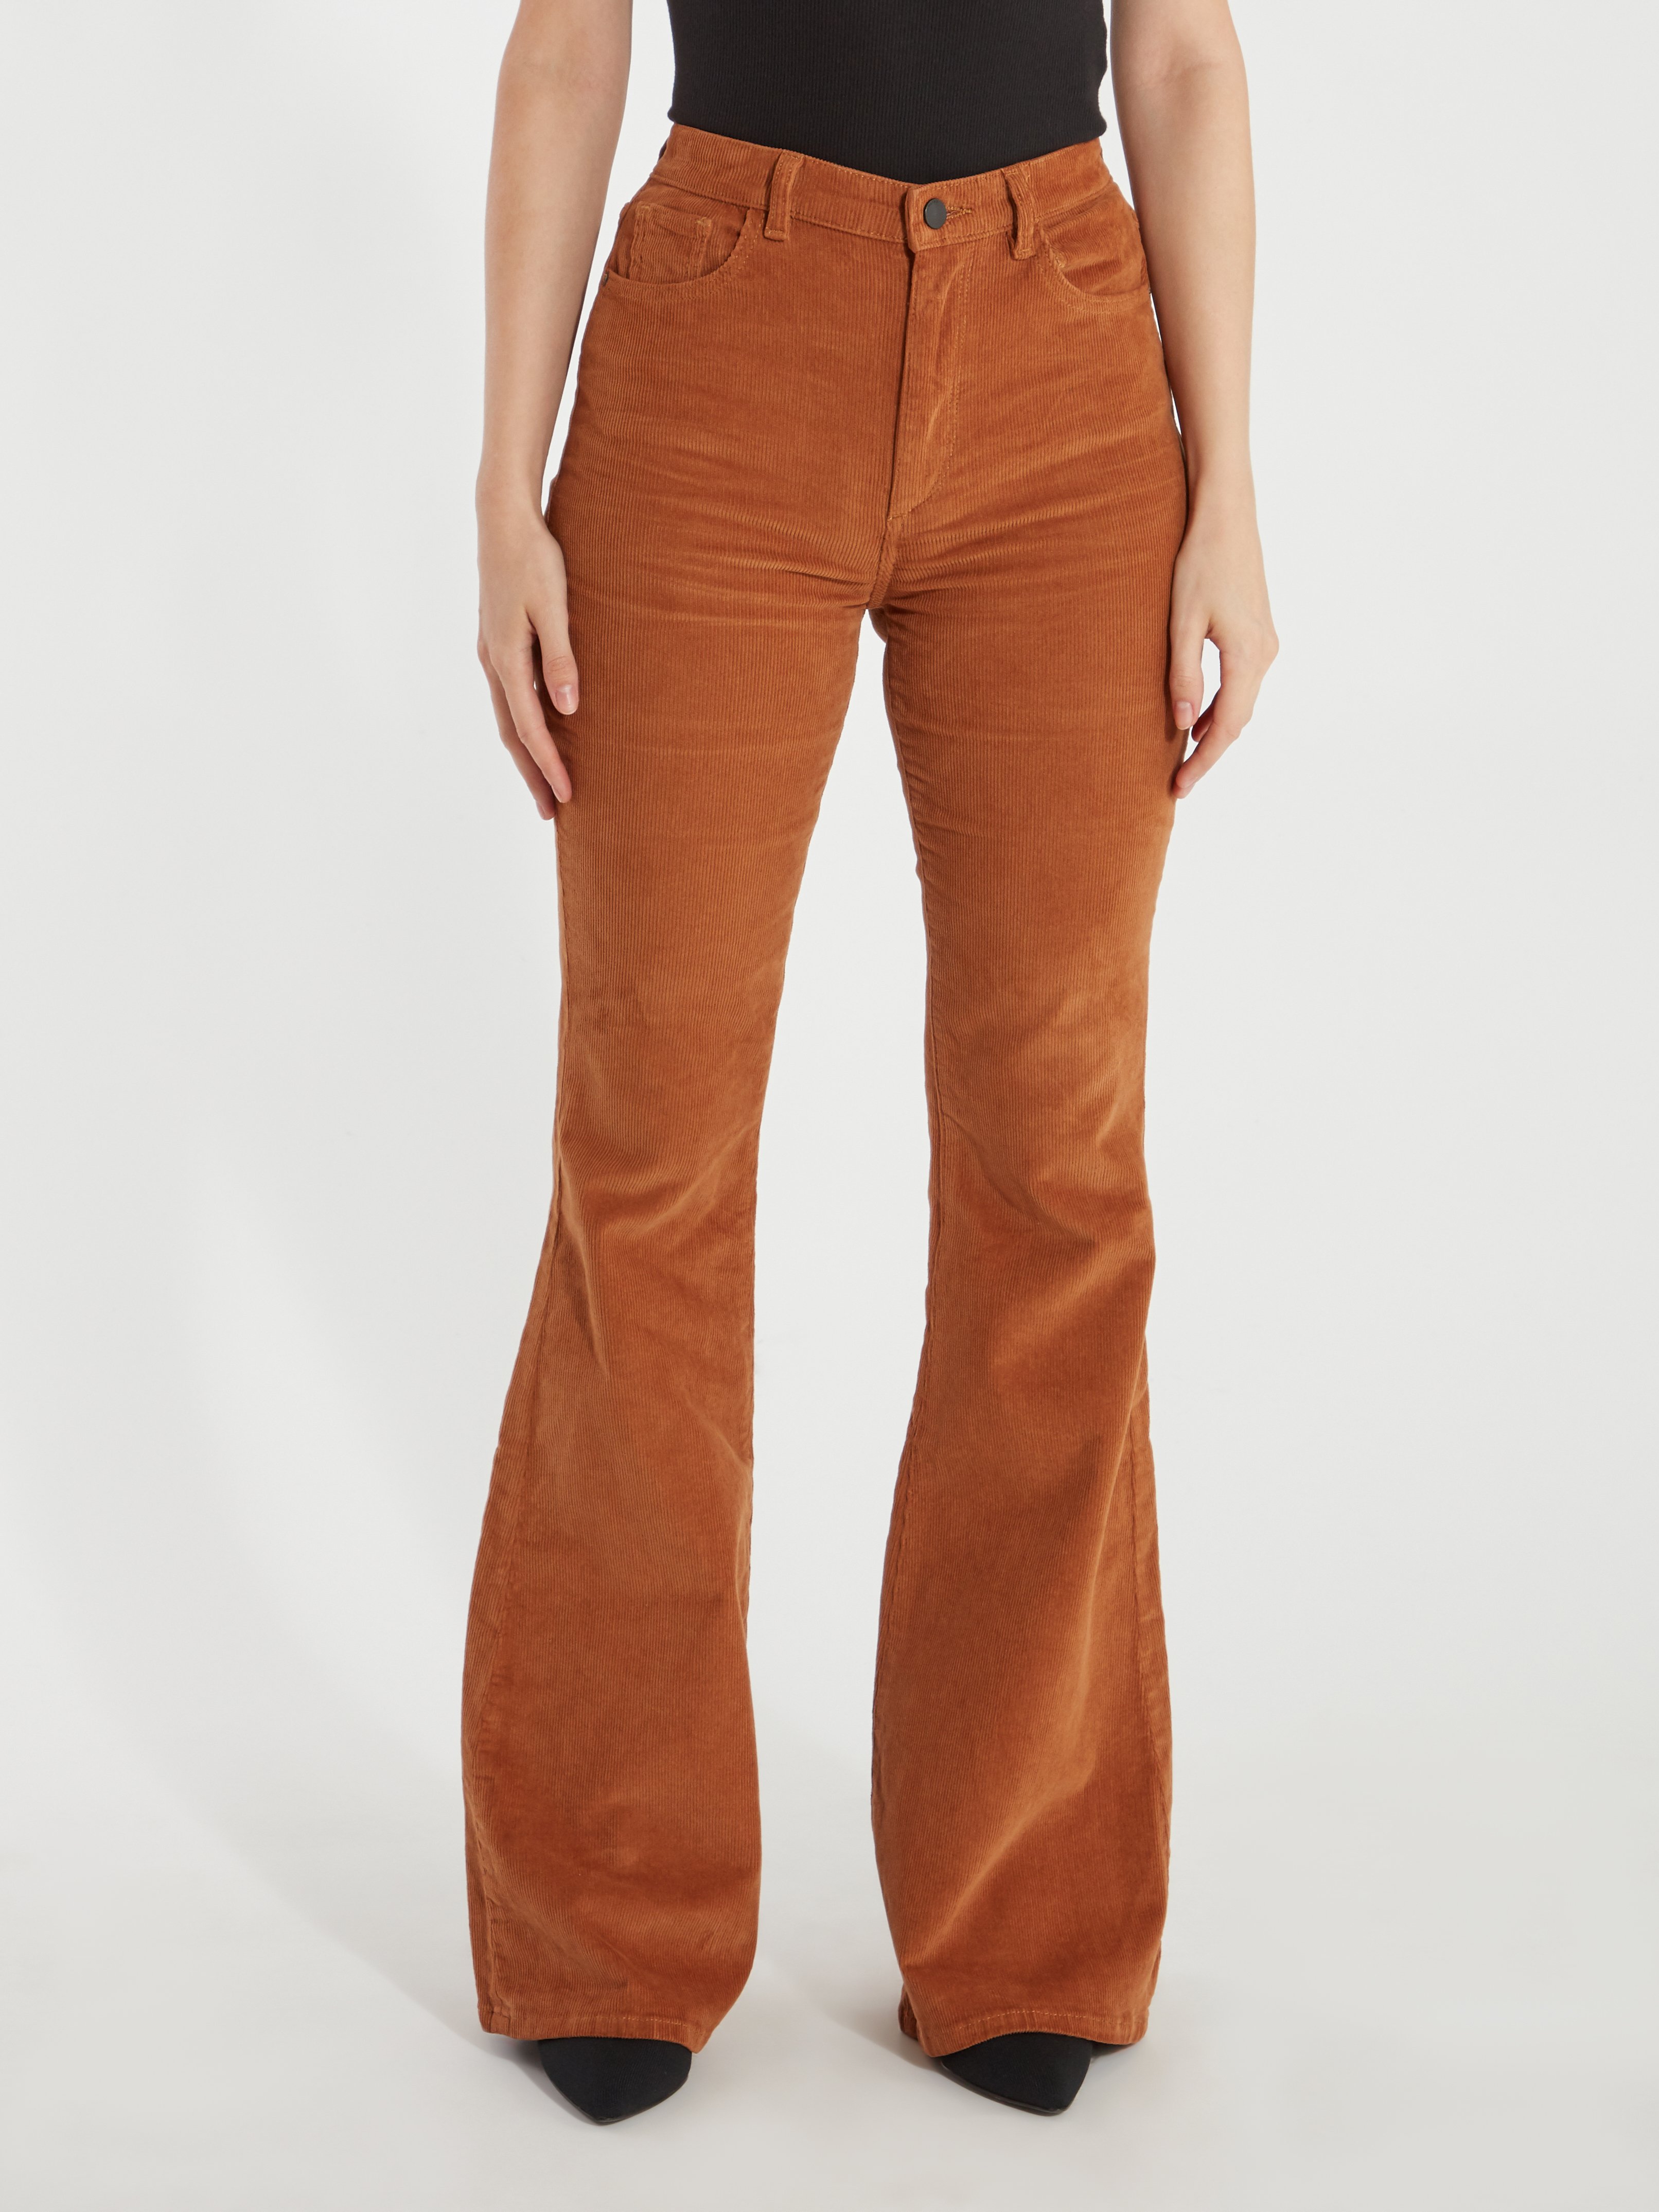 orange corduroy flare pants